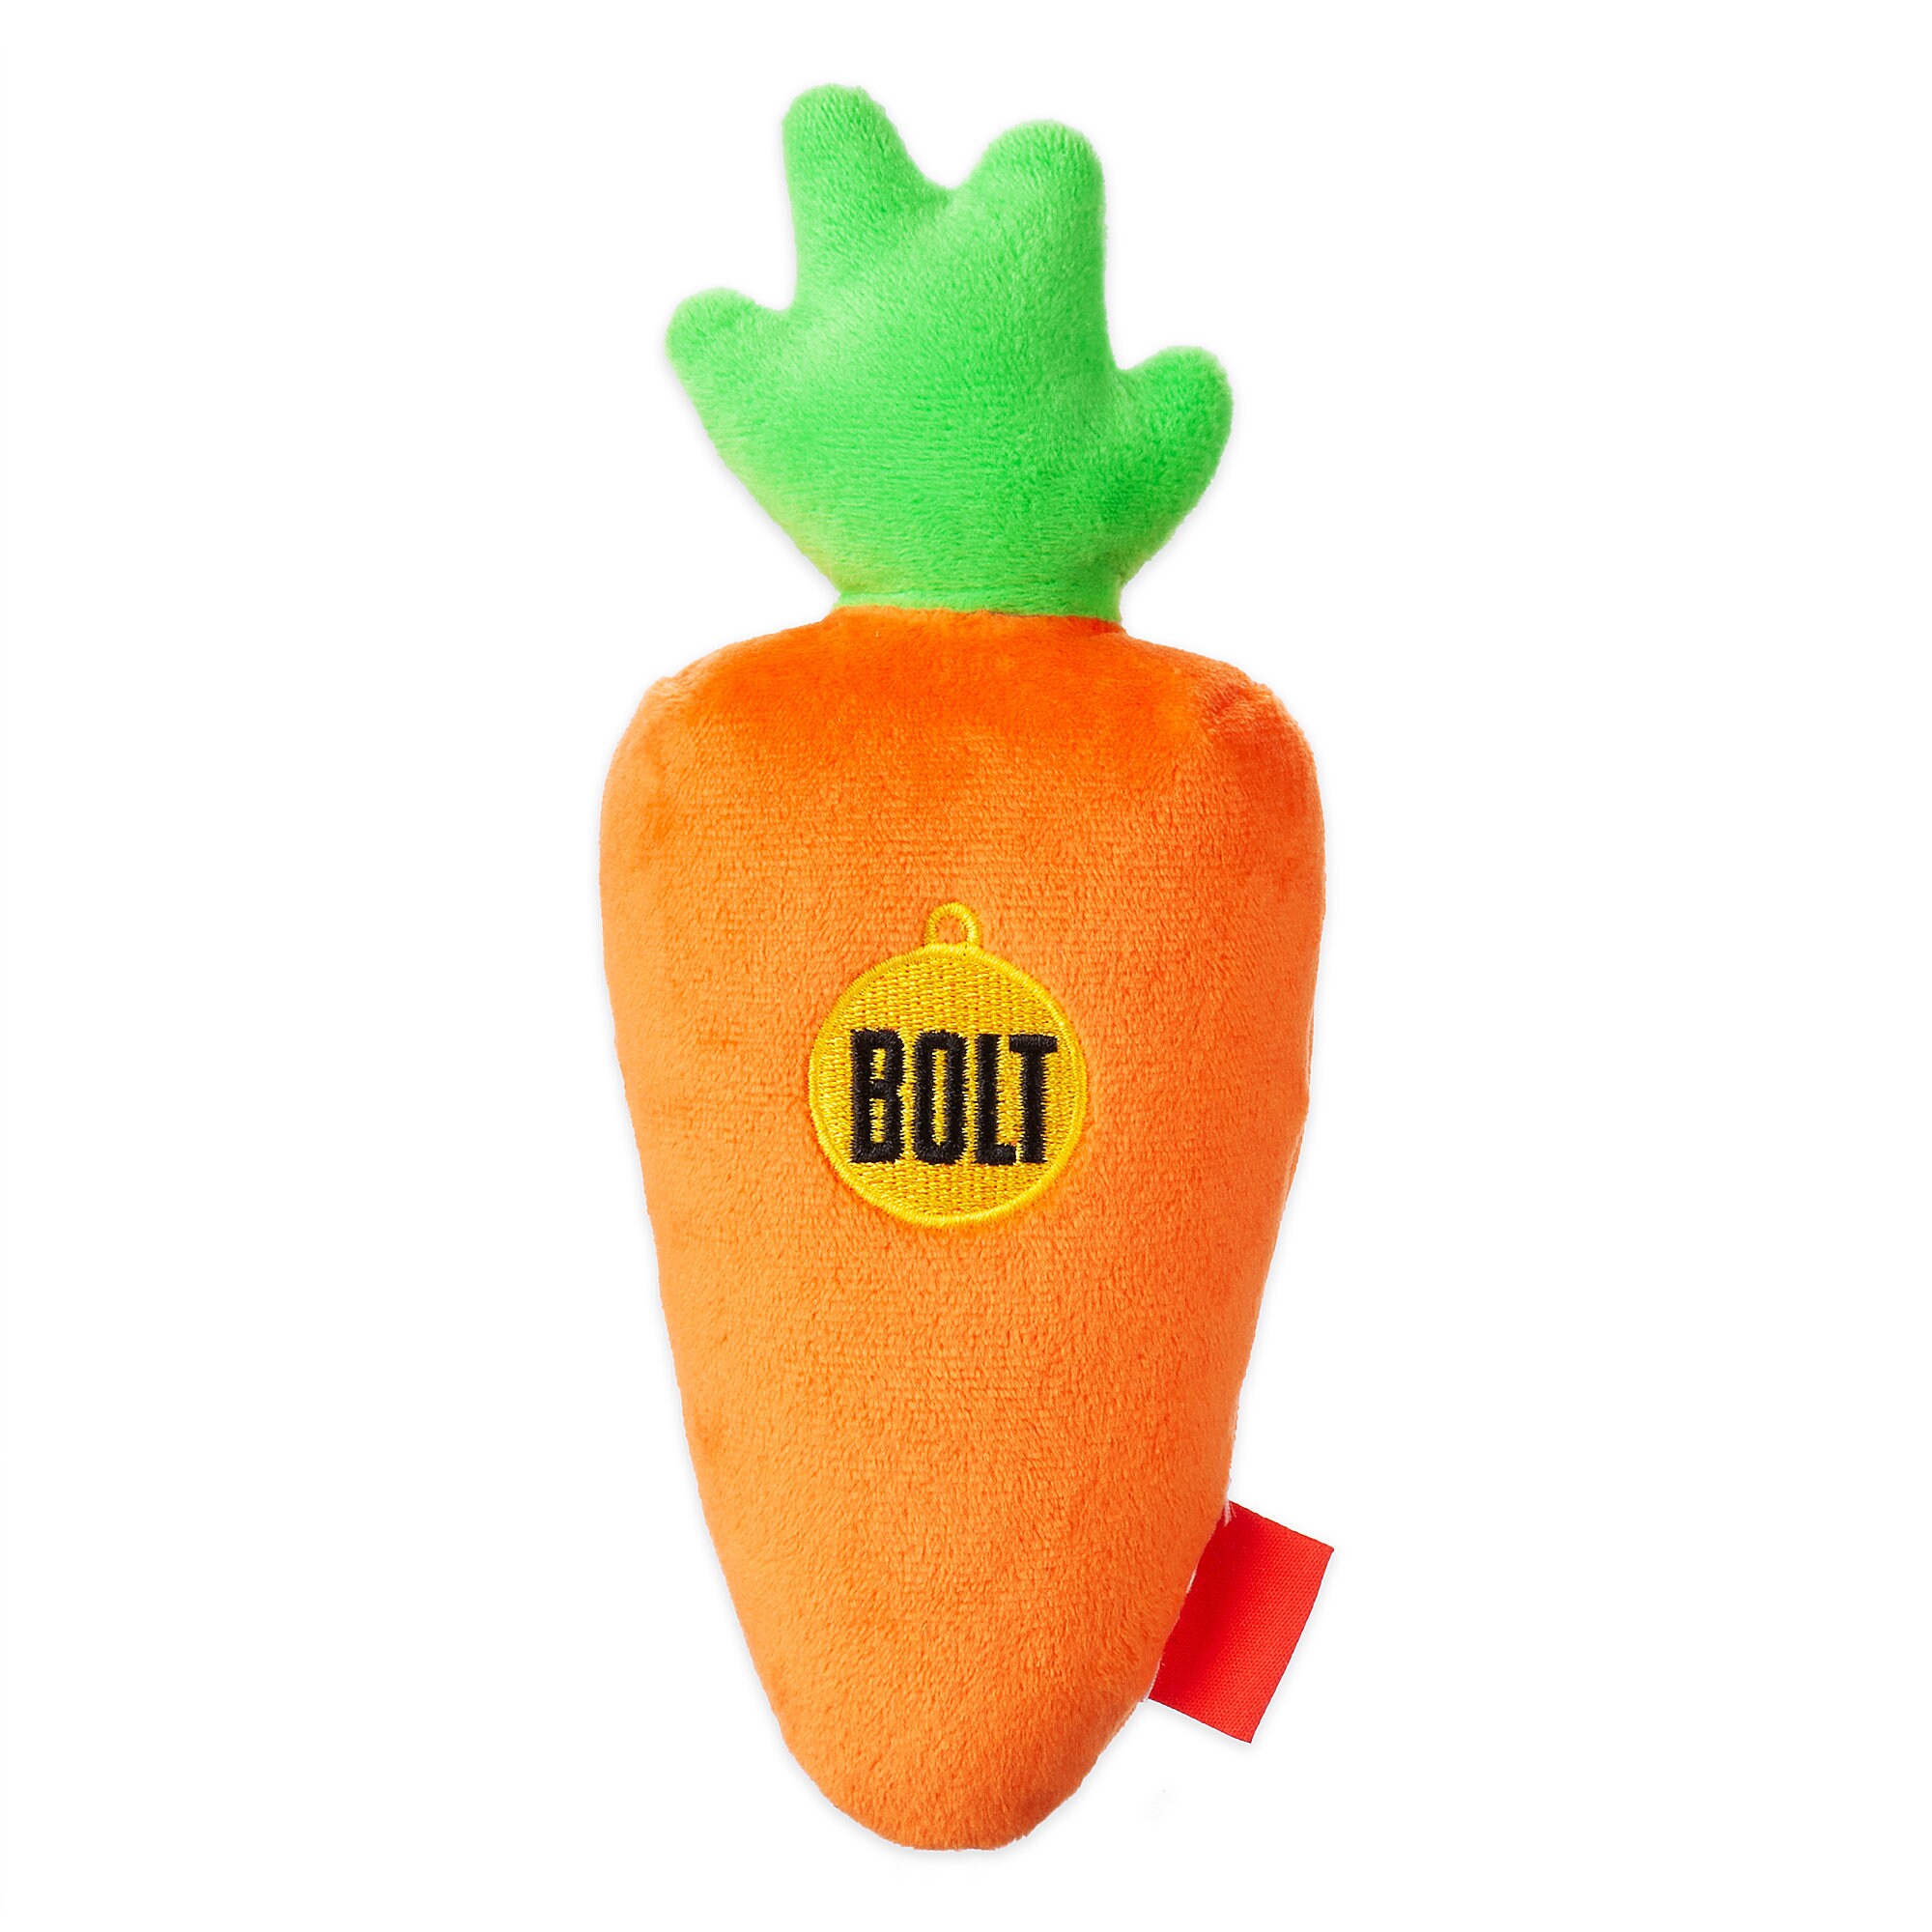 Bolt Mr. Carrot Chew Toy - Oh My Disney